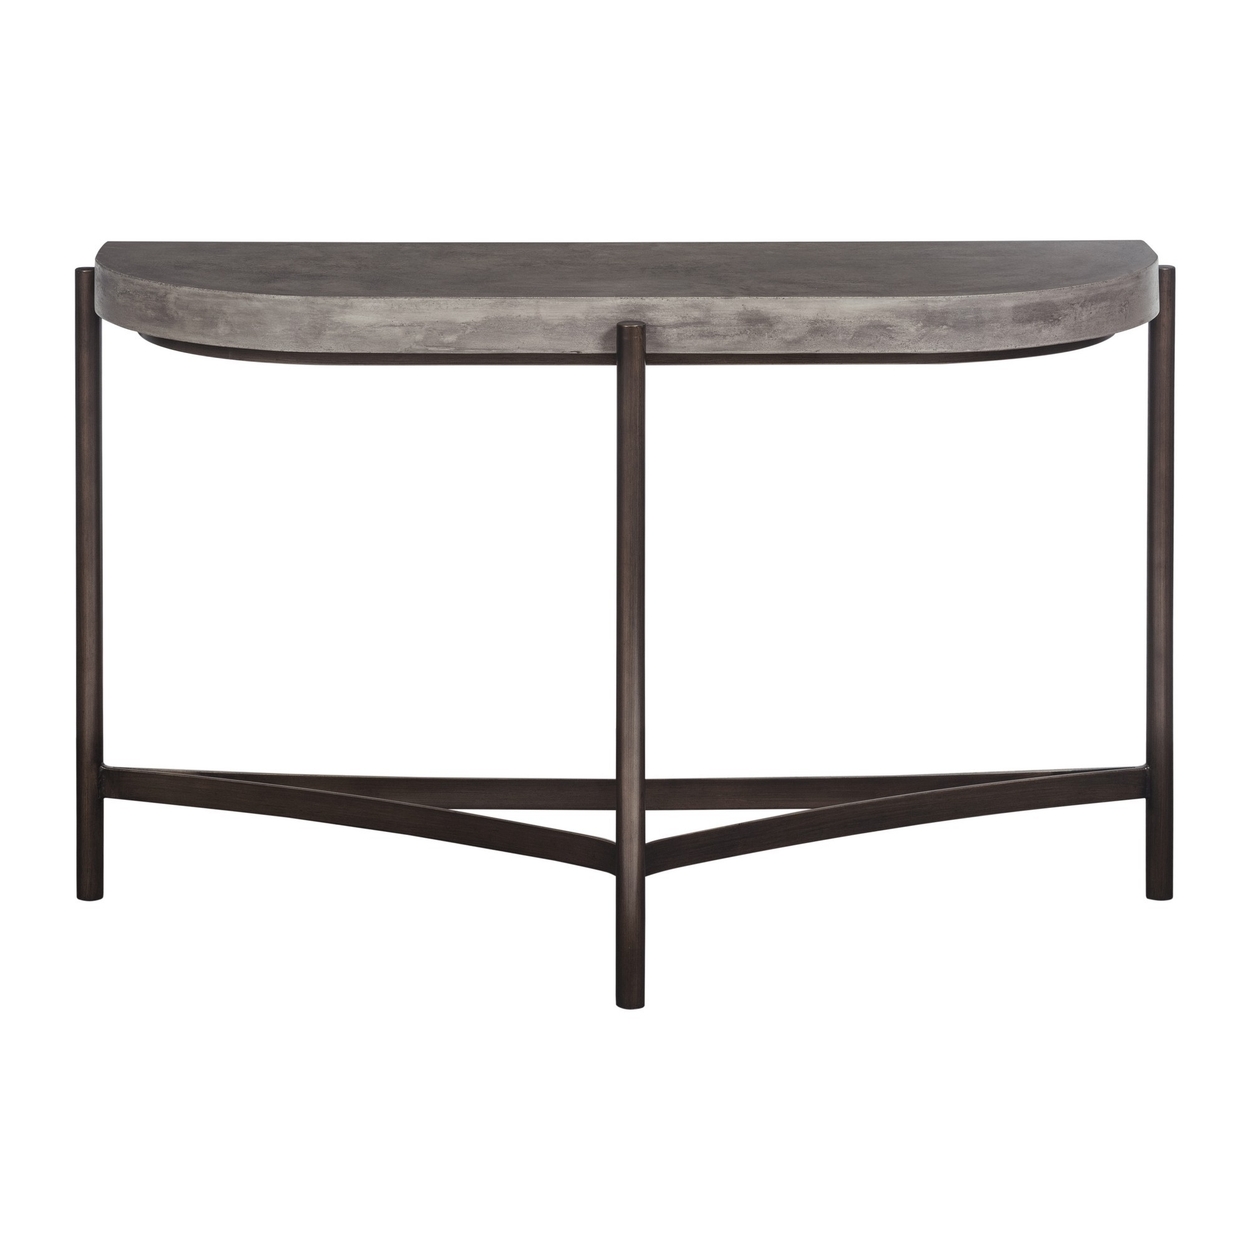 Agar 30 Inch Semi Circular Console Table, Concrete Top, Bronze Steel Legs- Saltoro Sherpi